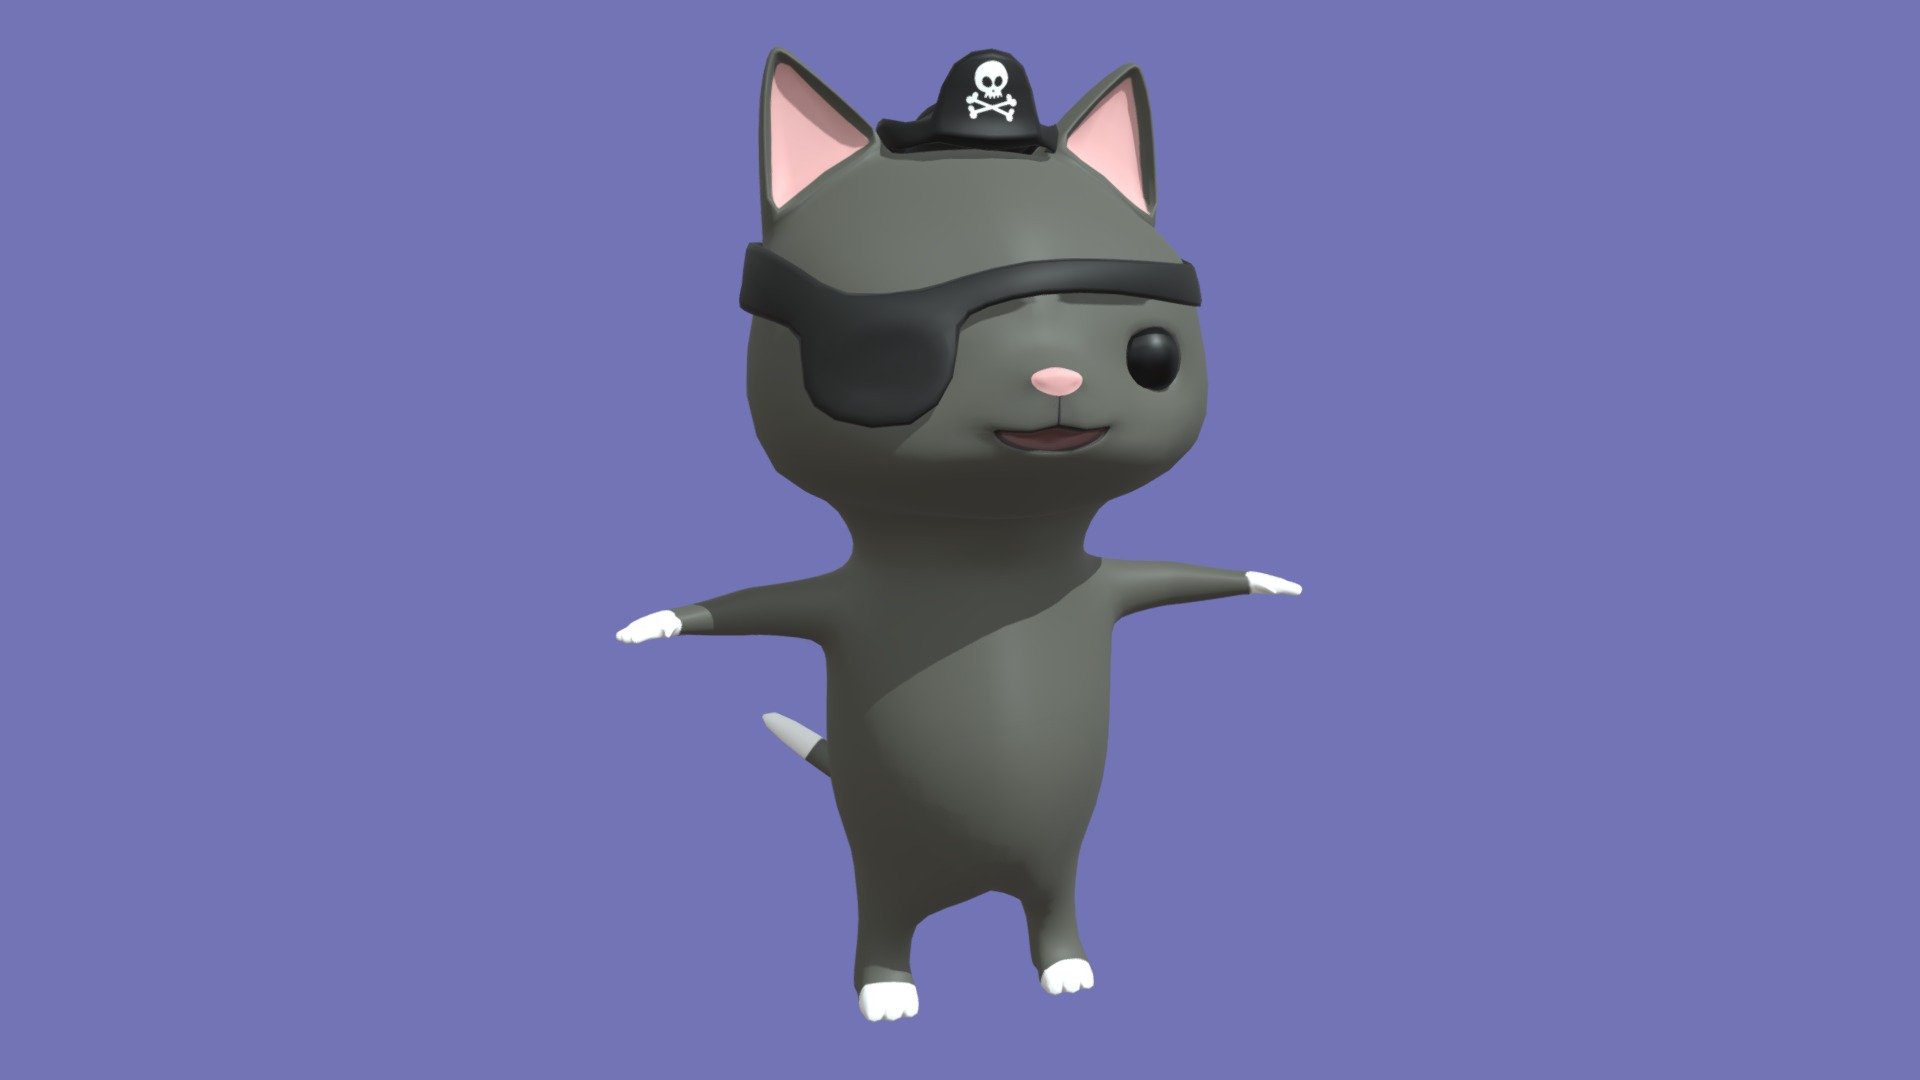 3D Model of a Cartoon pirate cat character called Chou 3d model